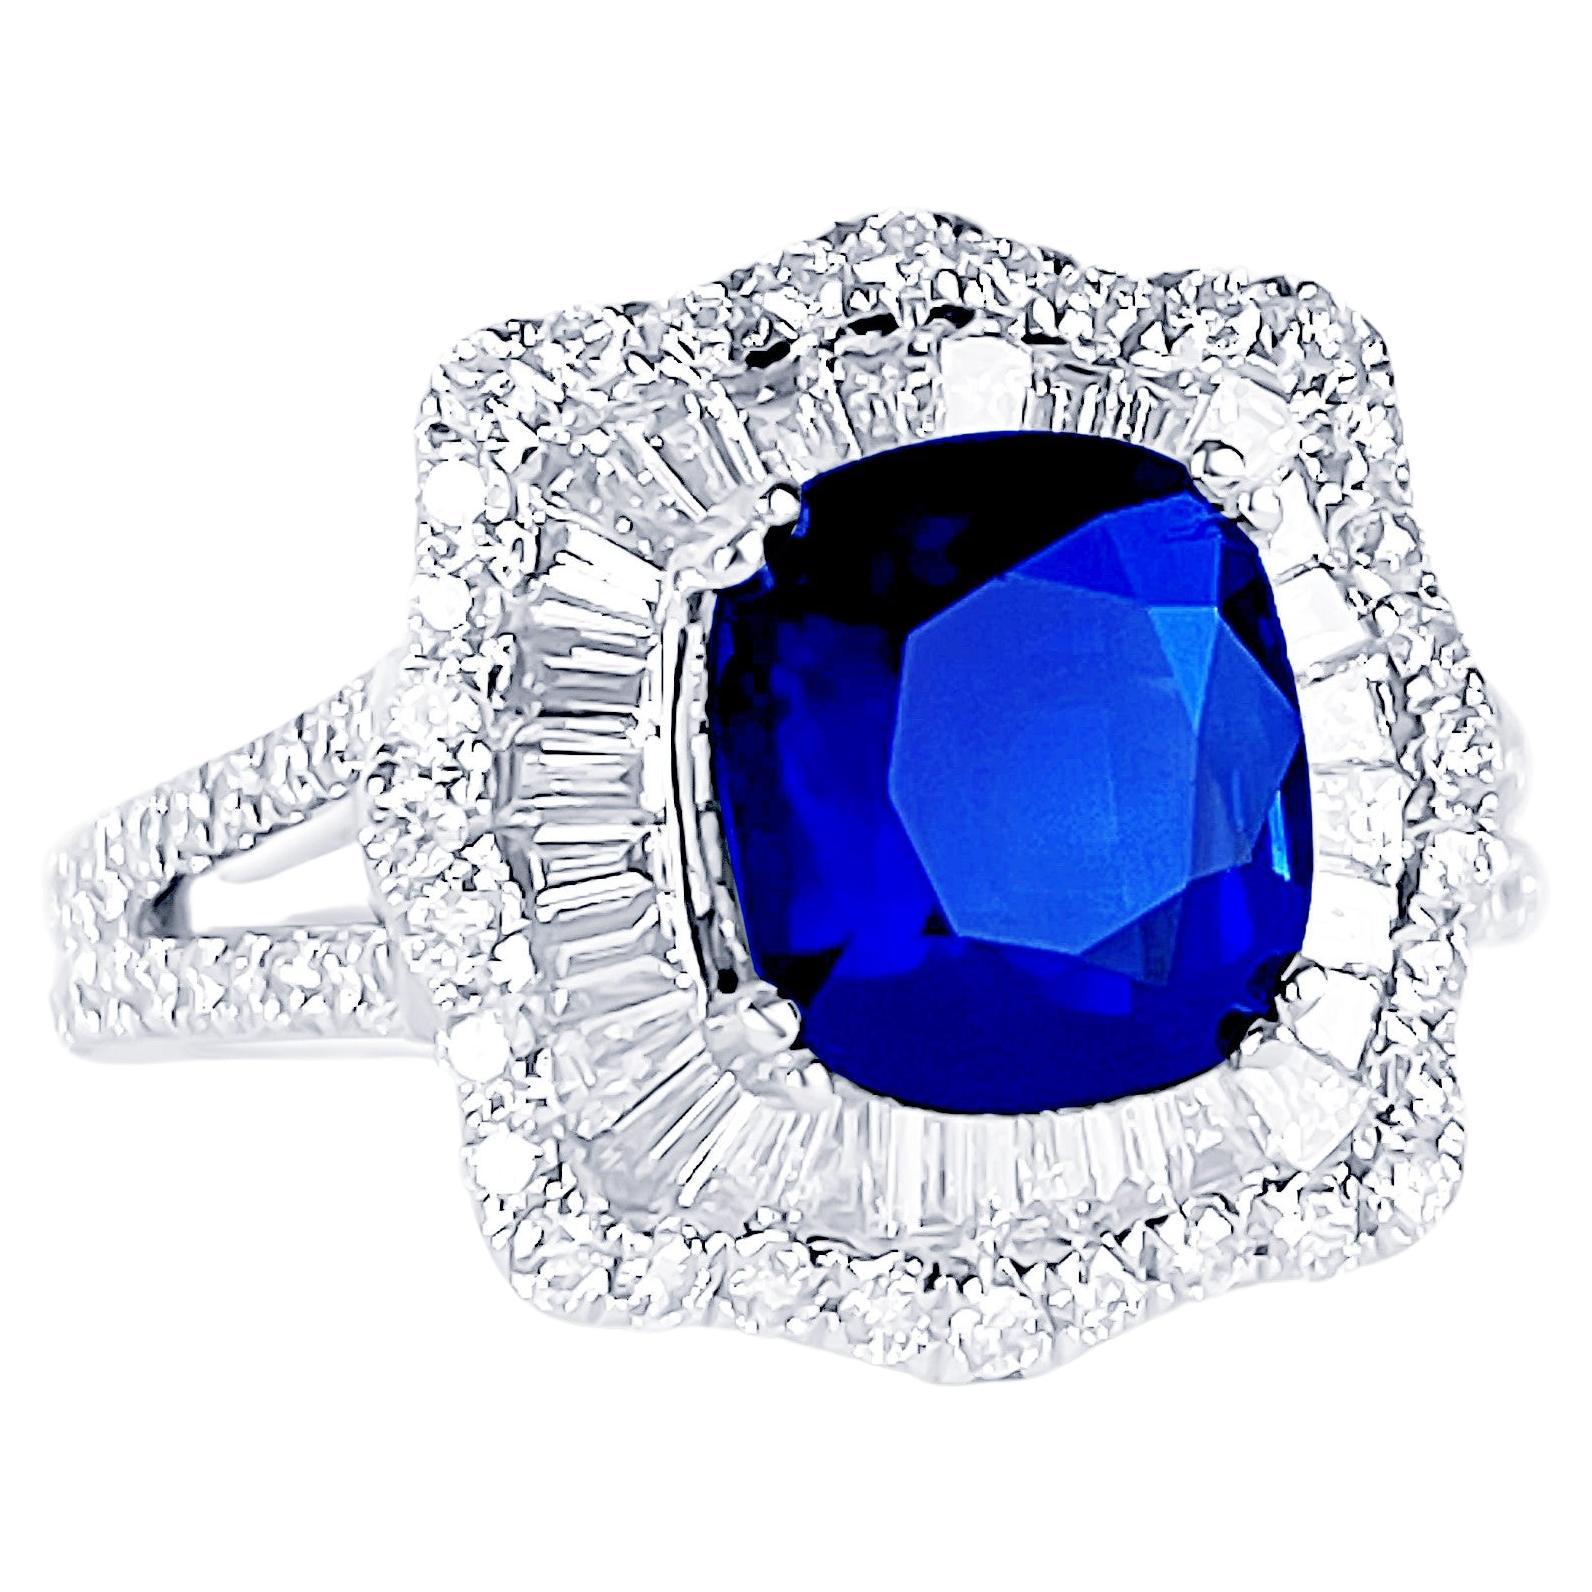 GIA Certified 3.55 Carat Royal Blue Burma Natural Sapphire Diamond Cocktail Ring